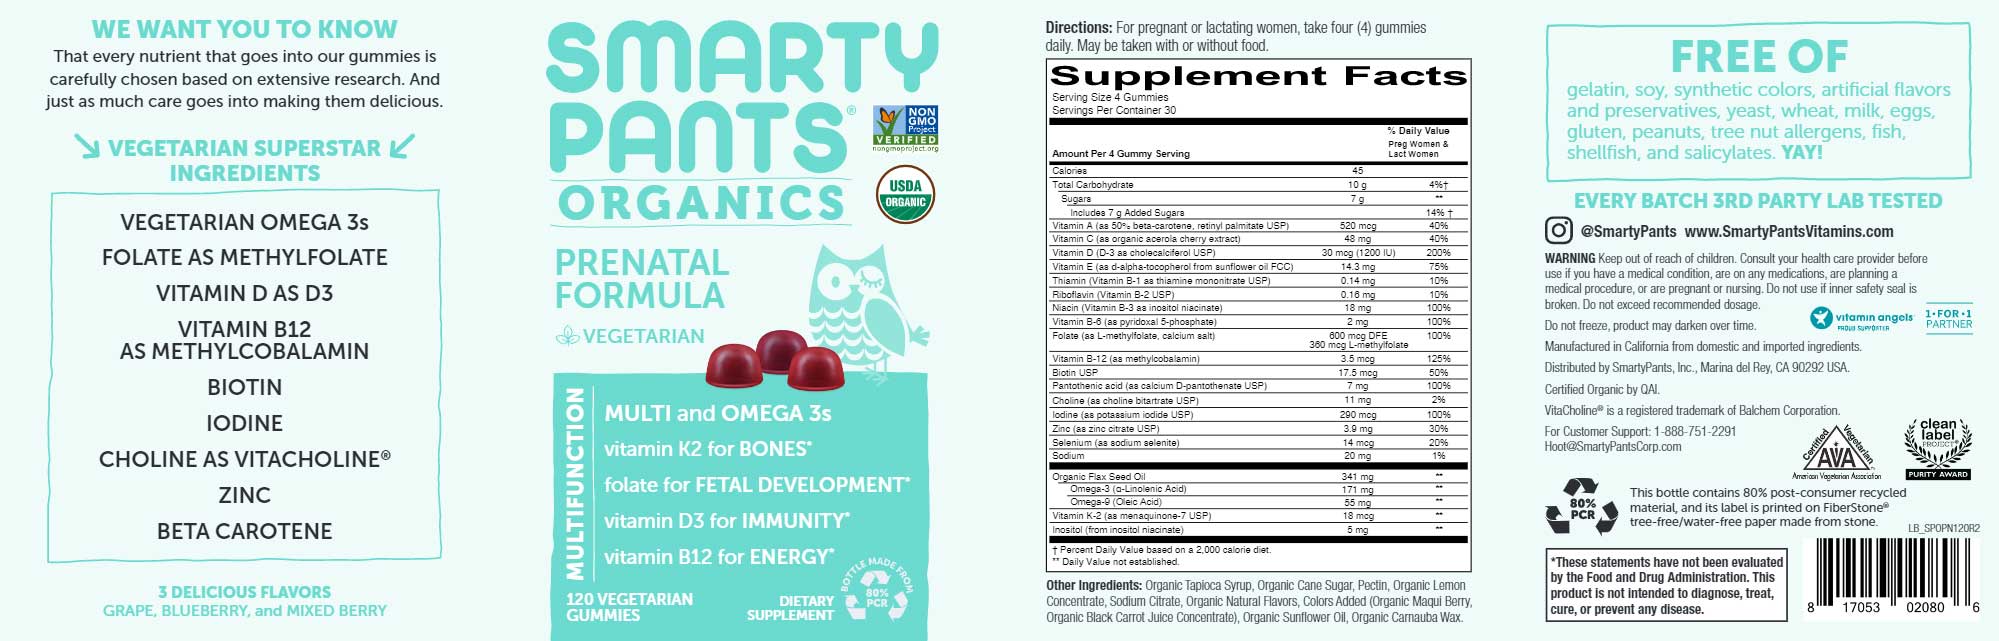 SmartyPants Prenatal Organic Formula Ingredients